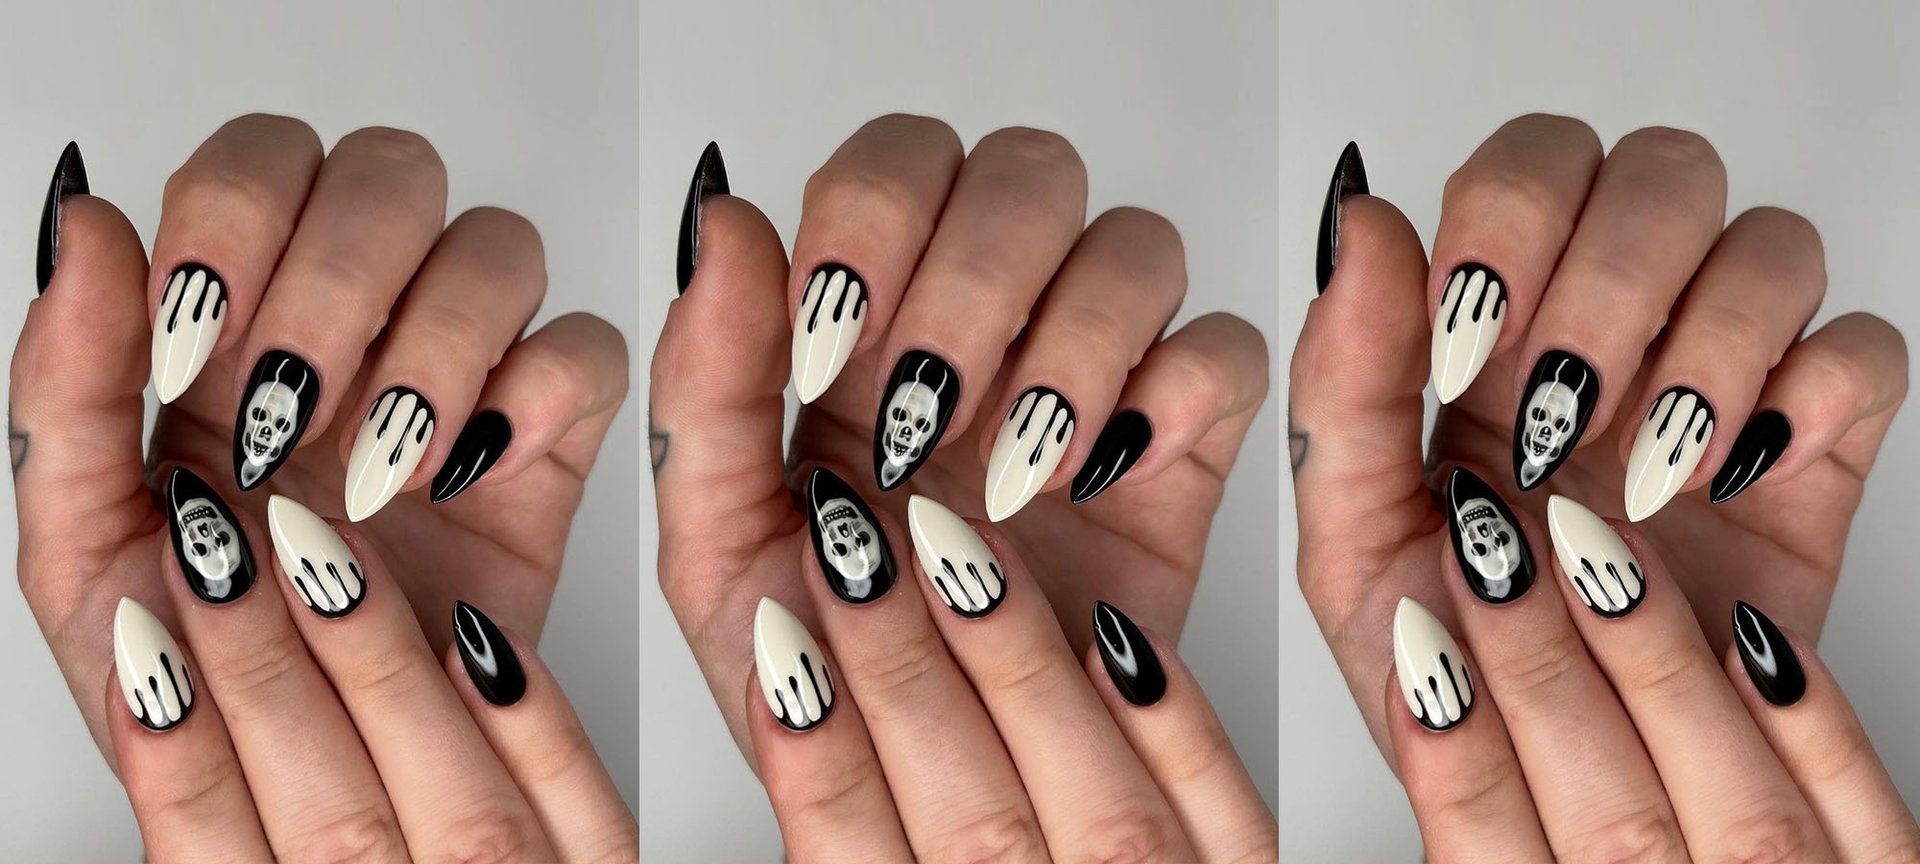 3. Halloween themed nail art designs - wide 1